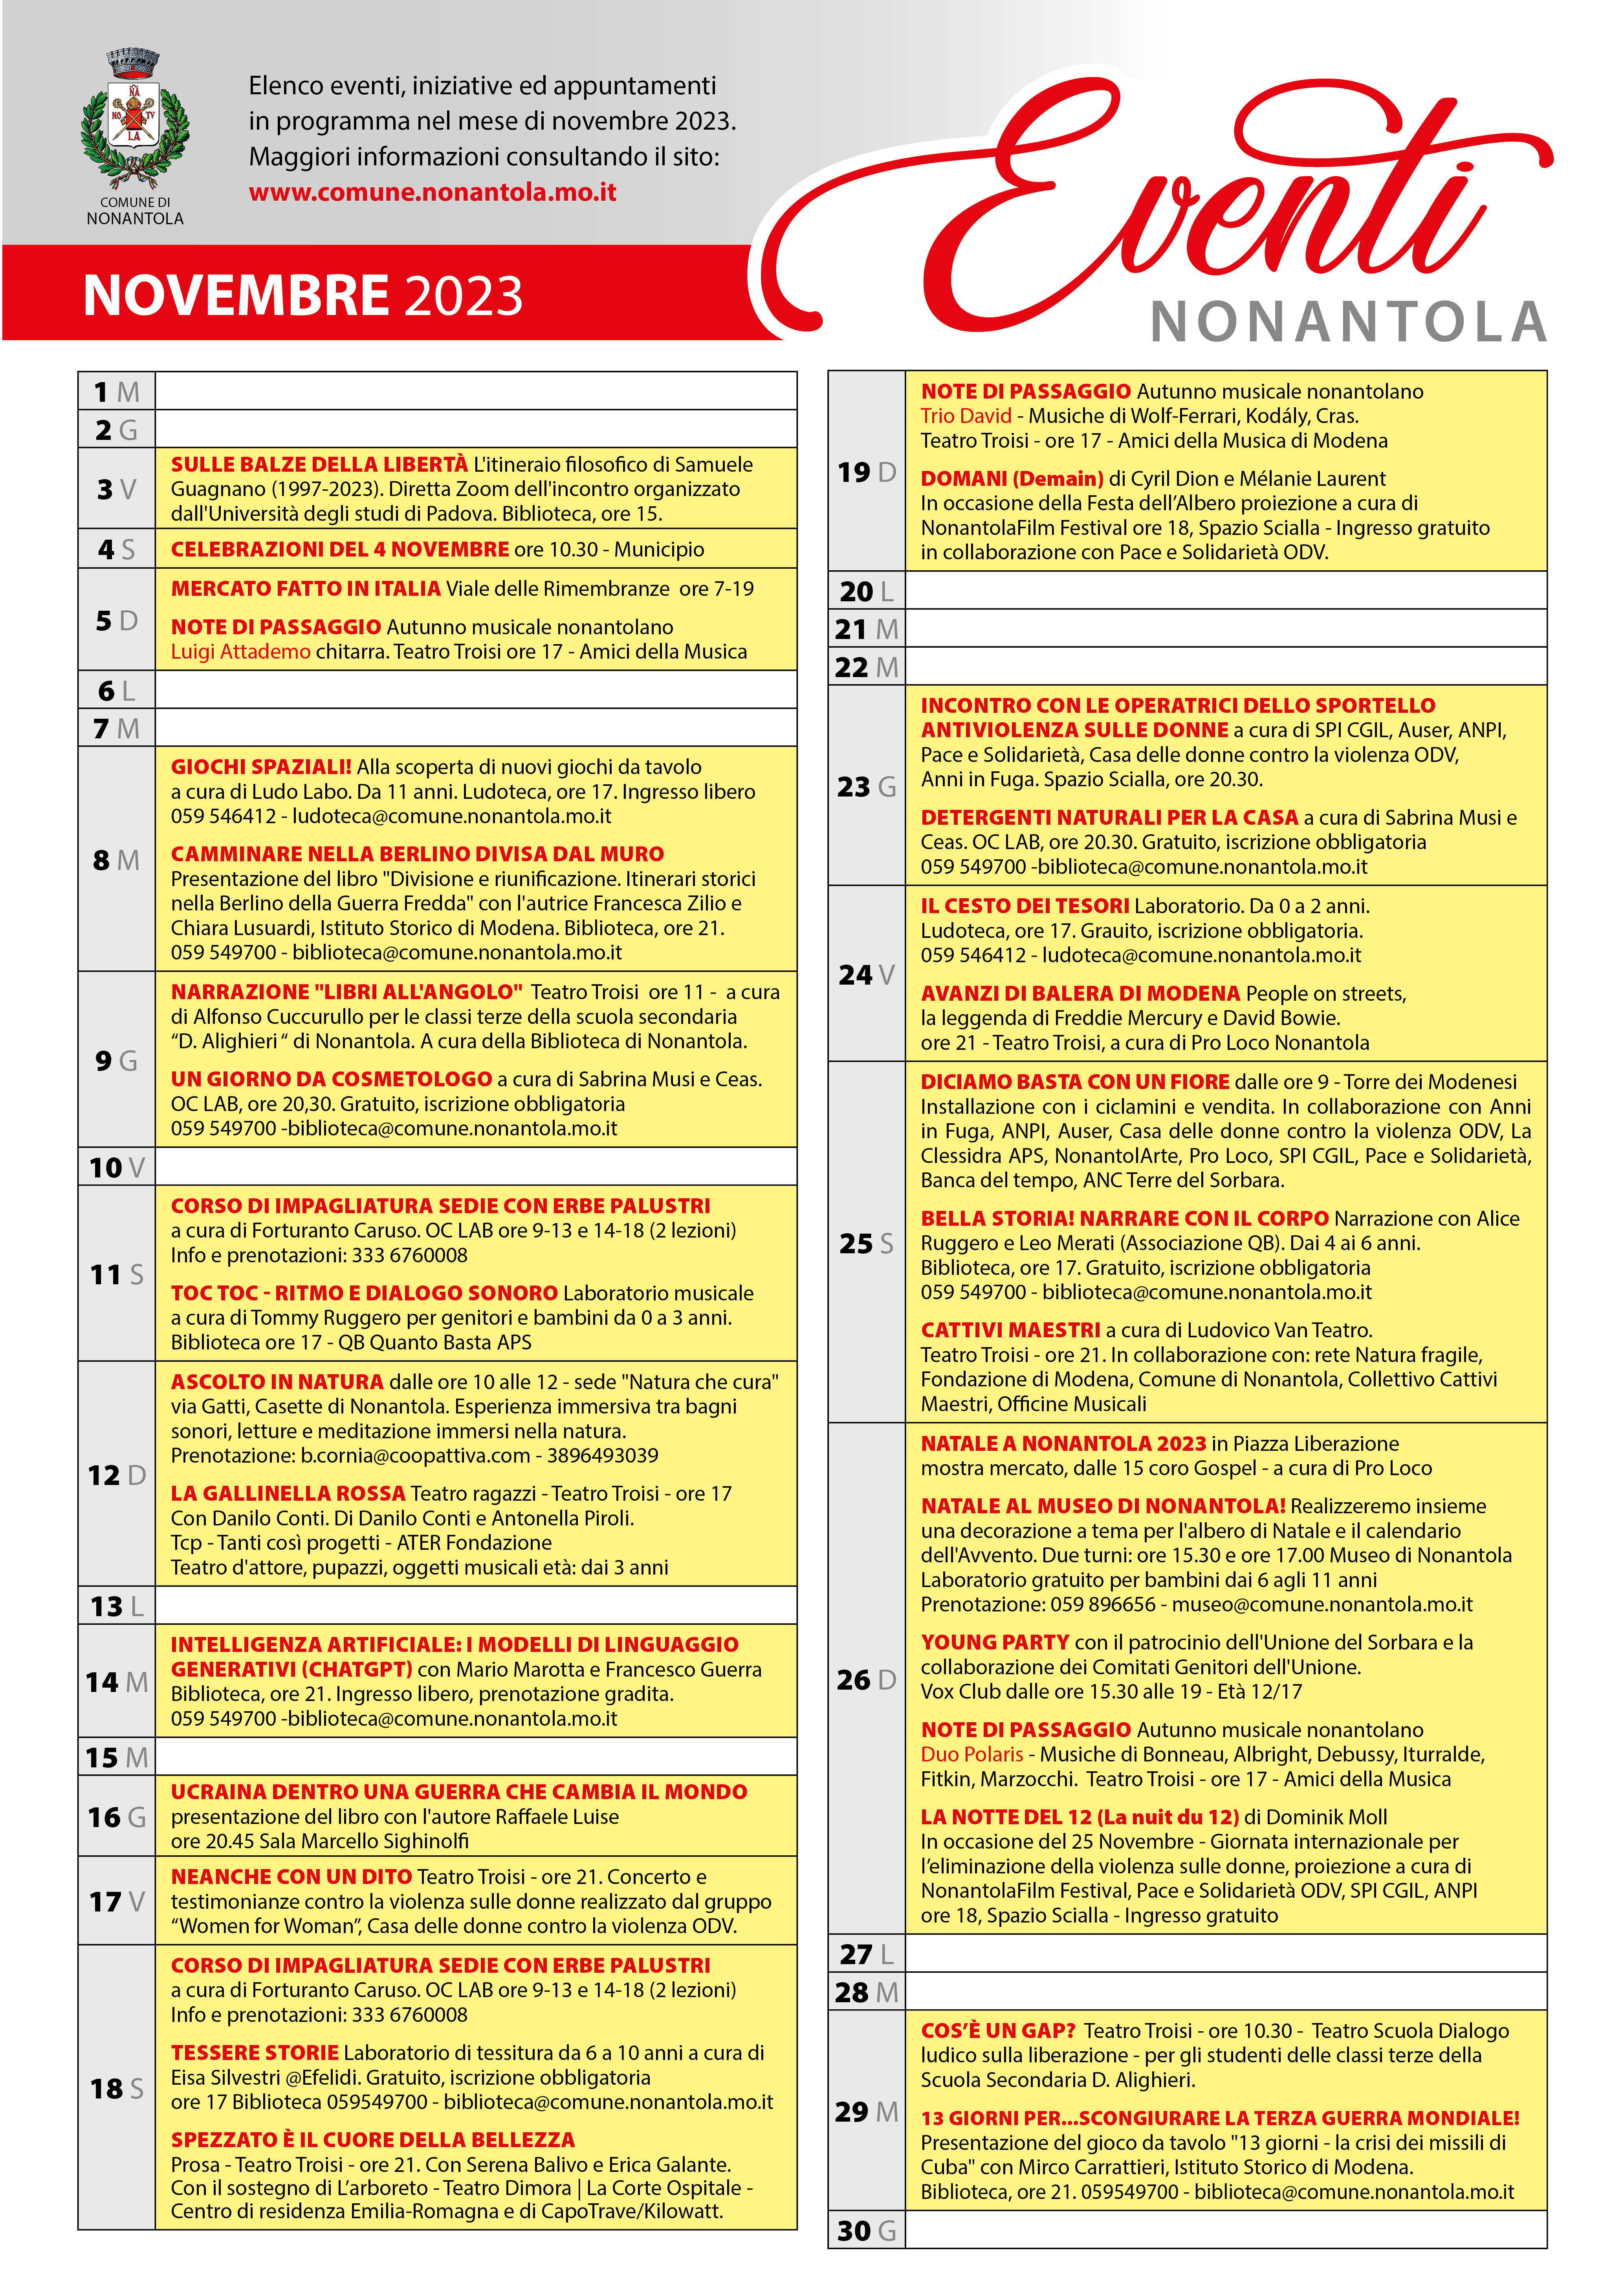 Calendario iniziative a Nonantola, Novembre 2023